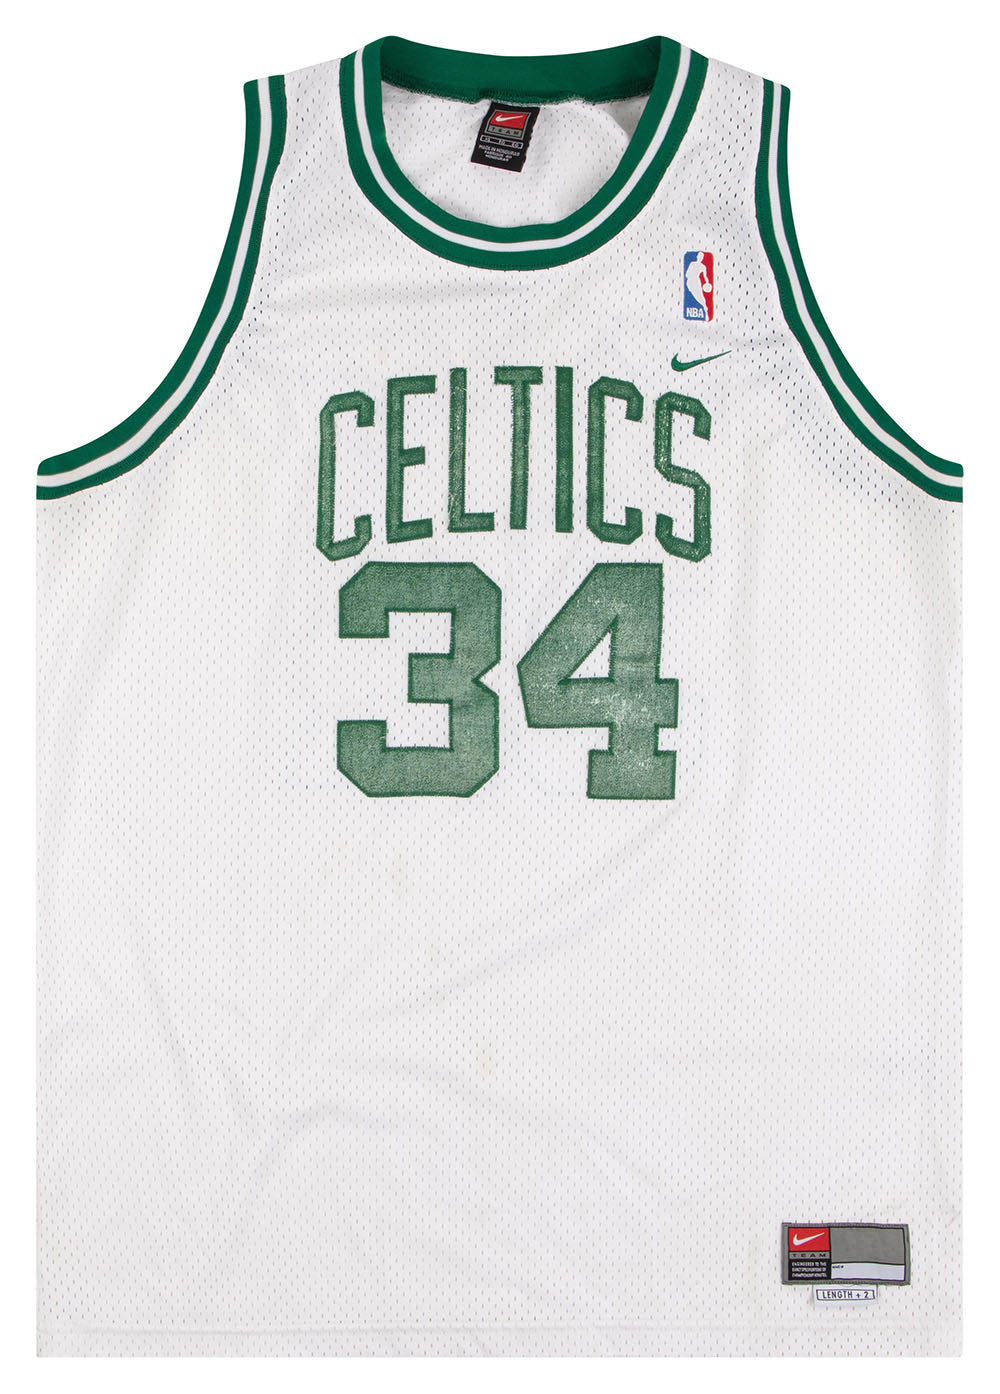 Nba Boston Celtics Basketball Jersey #34 Pierce